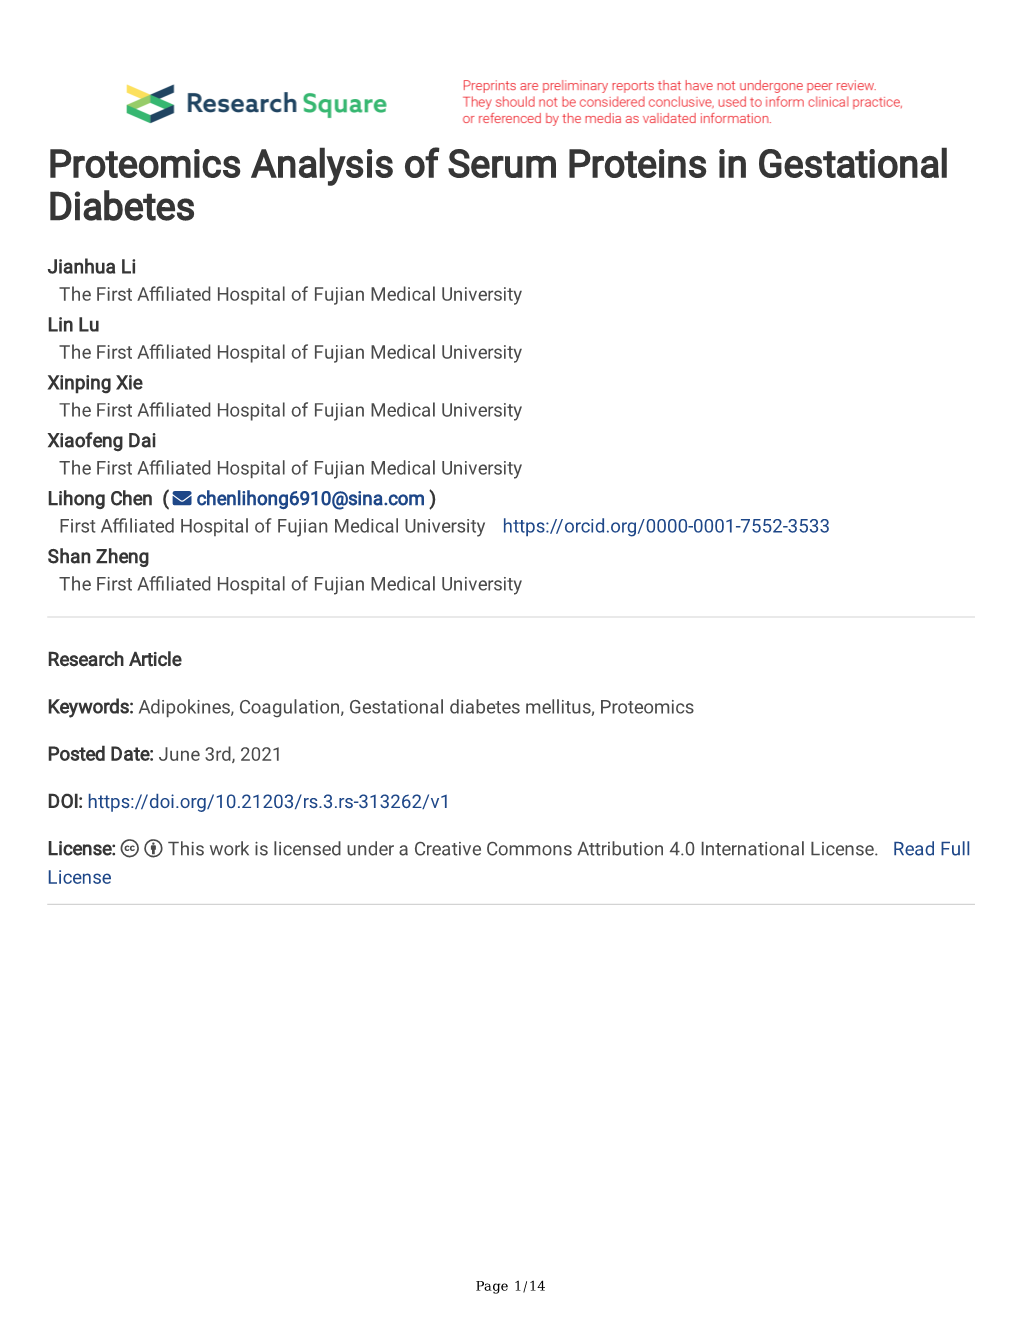 Proteomics Analysis of Serum Proteins in Gestational Diabetes